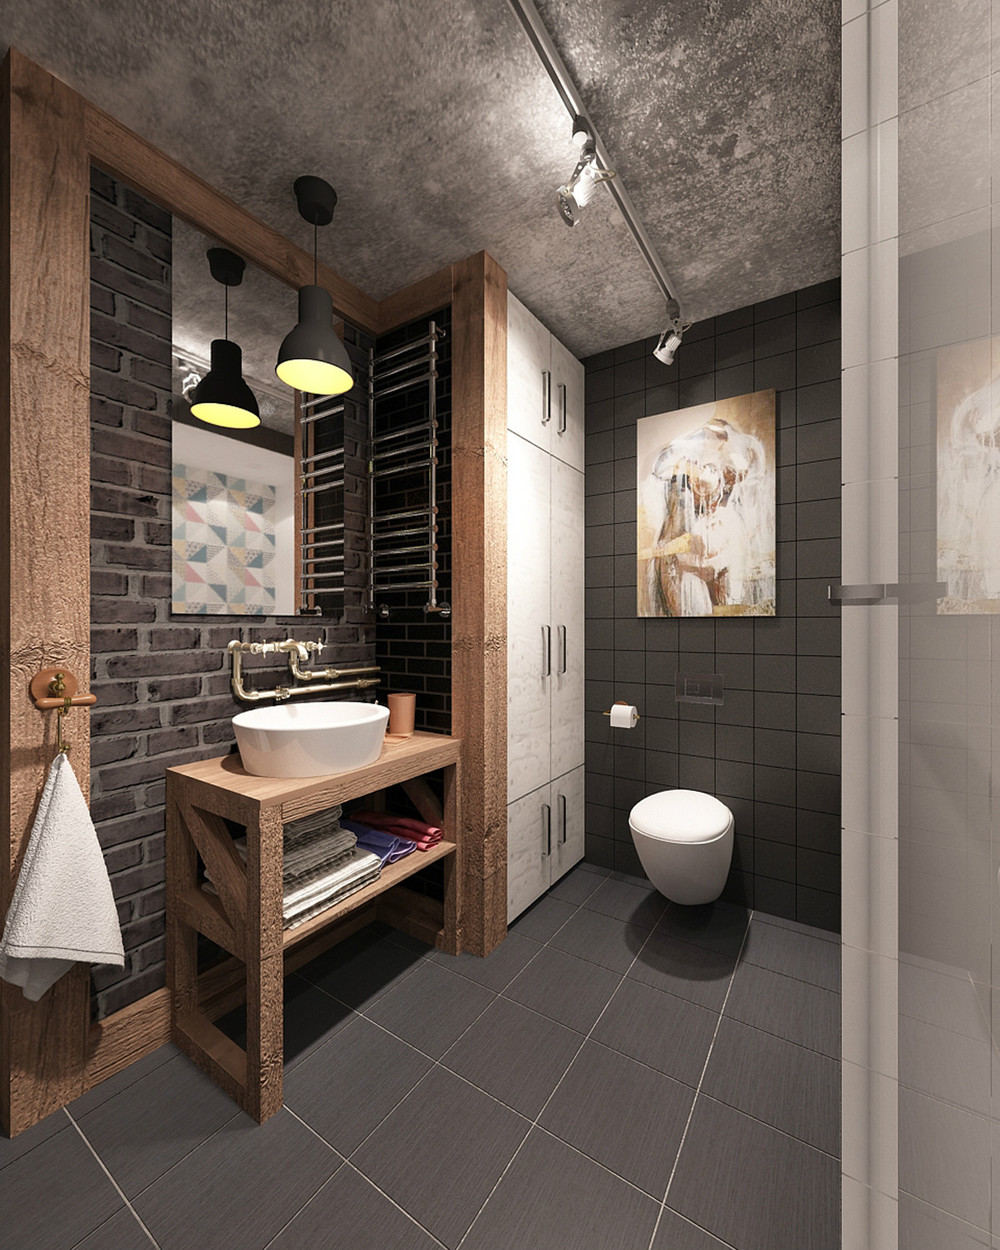 simple small decorative bathroom "width =" 1000 "height =" 1250 "srcset =" https://mileray.com/wp-content/uploads/2016/09/open-industrial-bathroom-design-ART-UGOL-1. jpg 1000w, https://mileray.com/wp-content/uploads/2016/09/open-industrial-bathroom-design-ART-UGOL-1-240x300.jpg 240w, https://mileray.com/wp- content / uploads / 2016/09 / open-industrial-bad-design-ART-UGOL-1-768x960.jpg 768w, https://mileray.com/wp-content/uploads/2016/09/open-industrial-bathroom -design-ART-UGOL-1-819x1024.jpg 819w, https://mileray.com/wp-content/uploads/2016/09/open-industrial-bathroom-design-ART-UGOL-1-696x870.jpg 696w , https://mileray.com/wp-content/uploads/2016/09/open-industrial-bathroom-design-ART-UGOL-1-336x420.jpg 336w "sizes =" (maximum width: 1000px) 100vw, 1000px